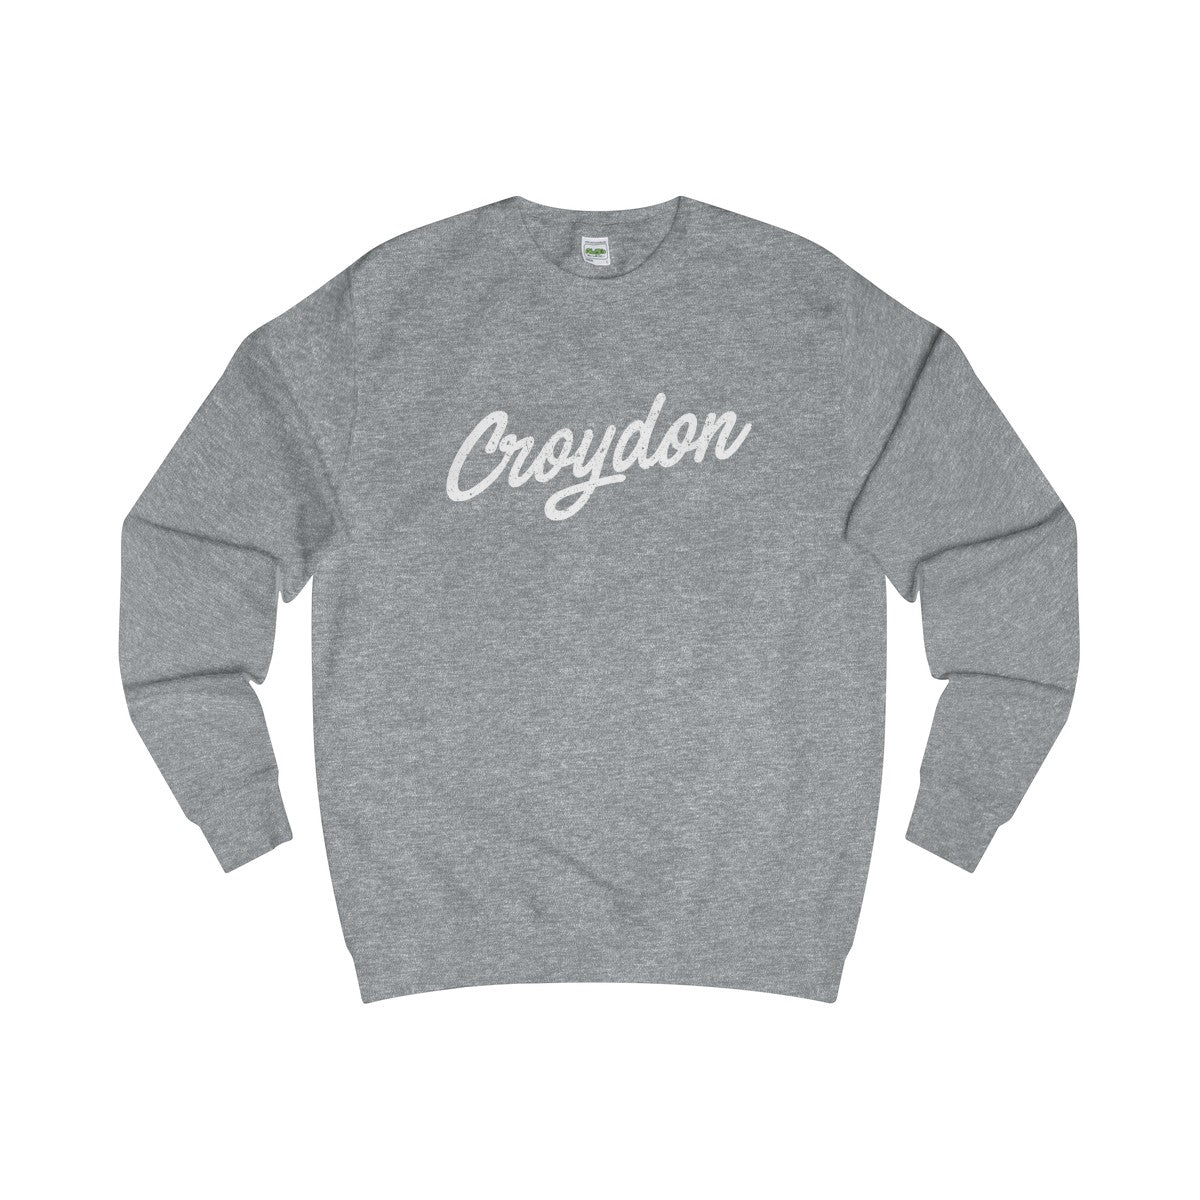 Croydon Scripted Sweater